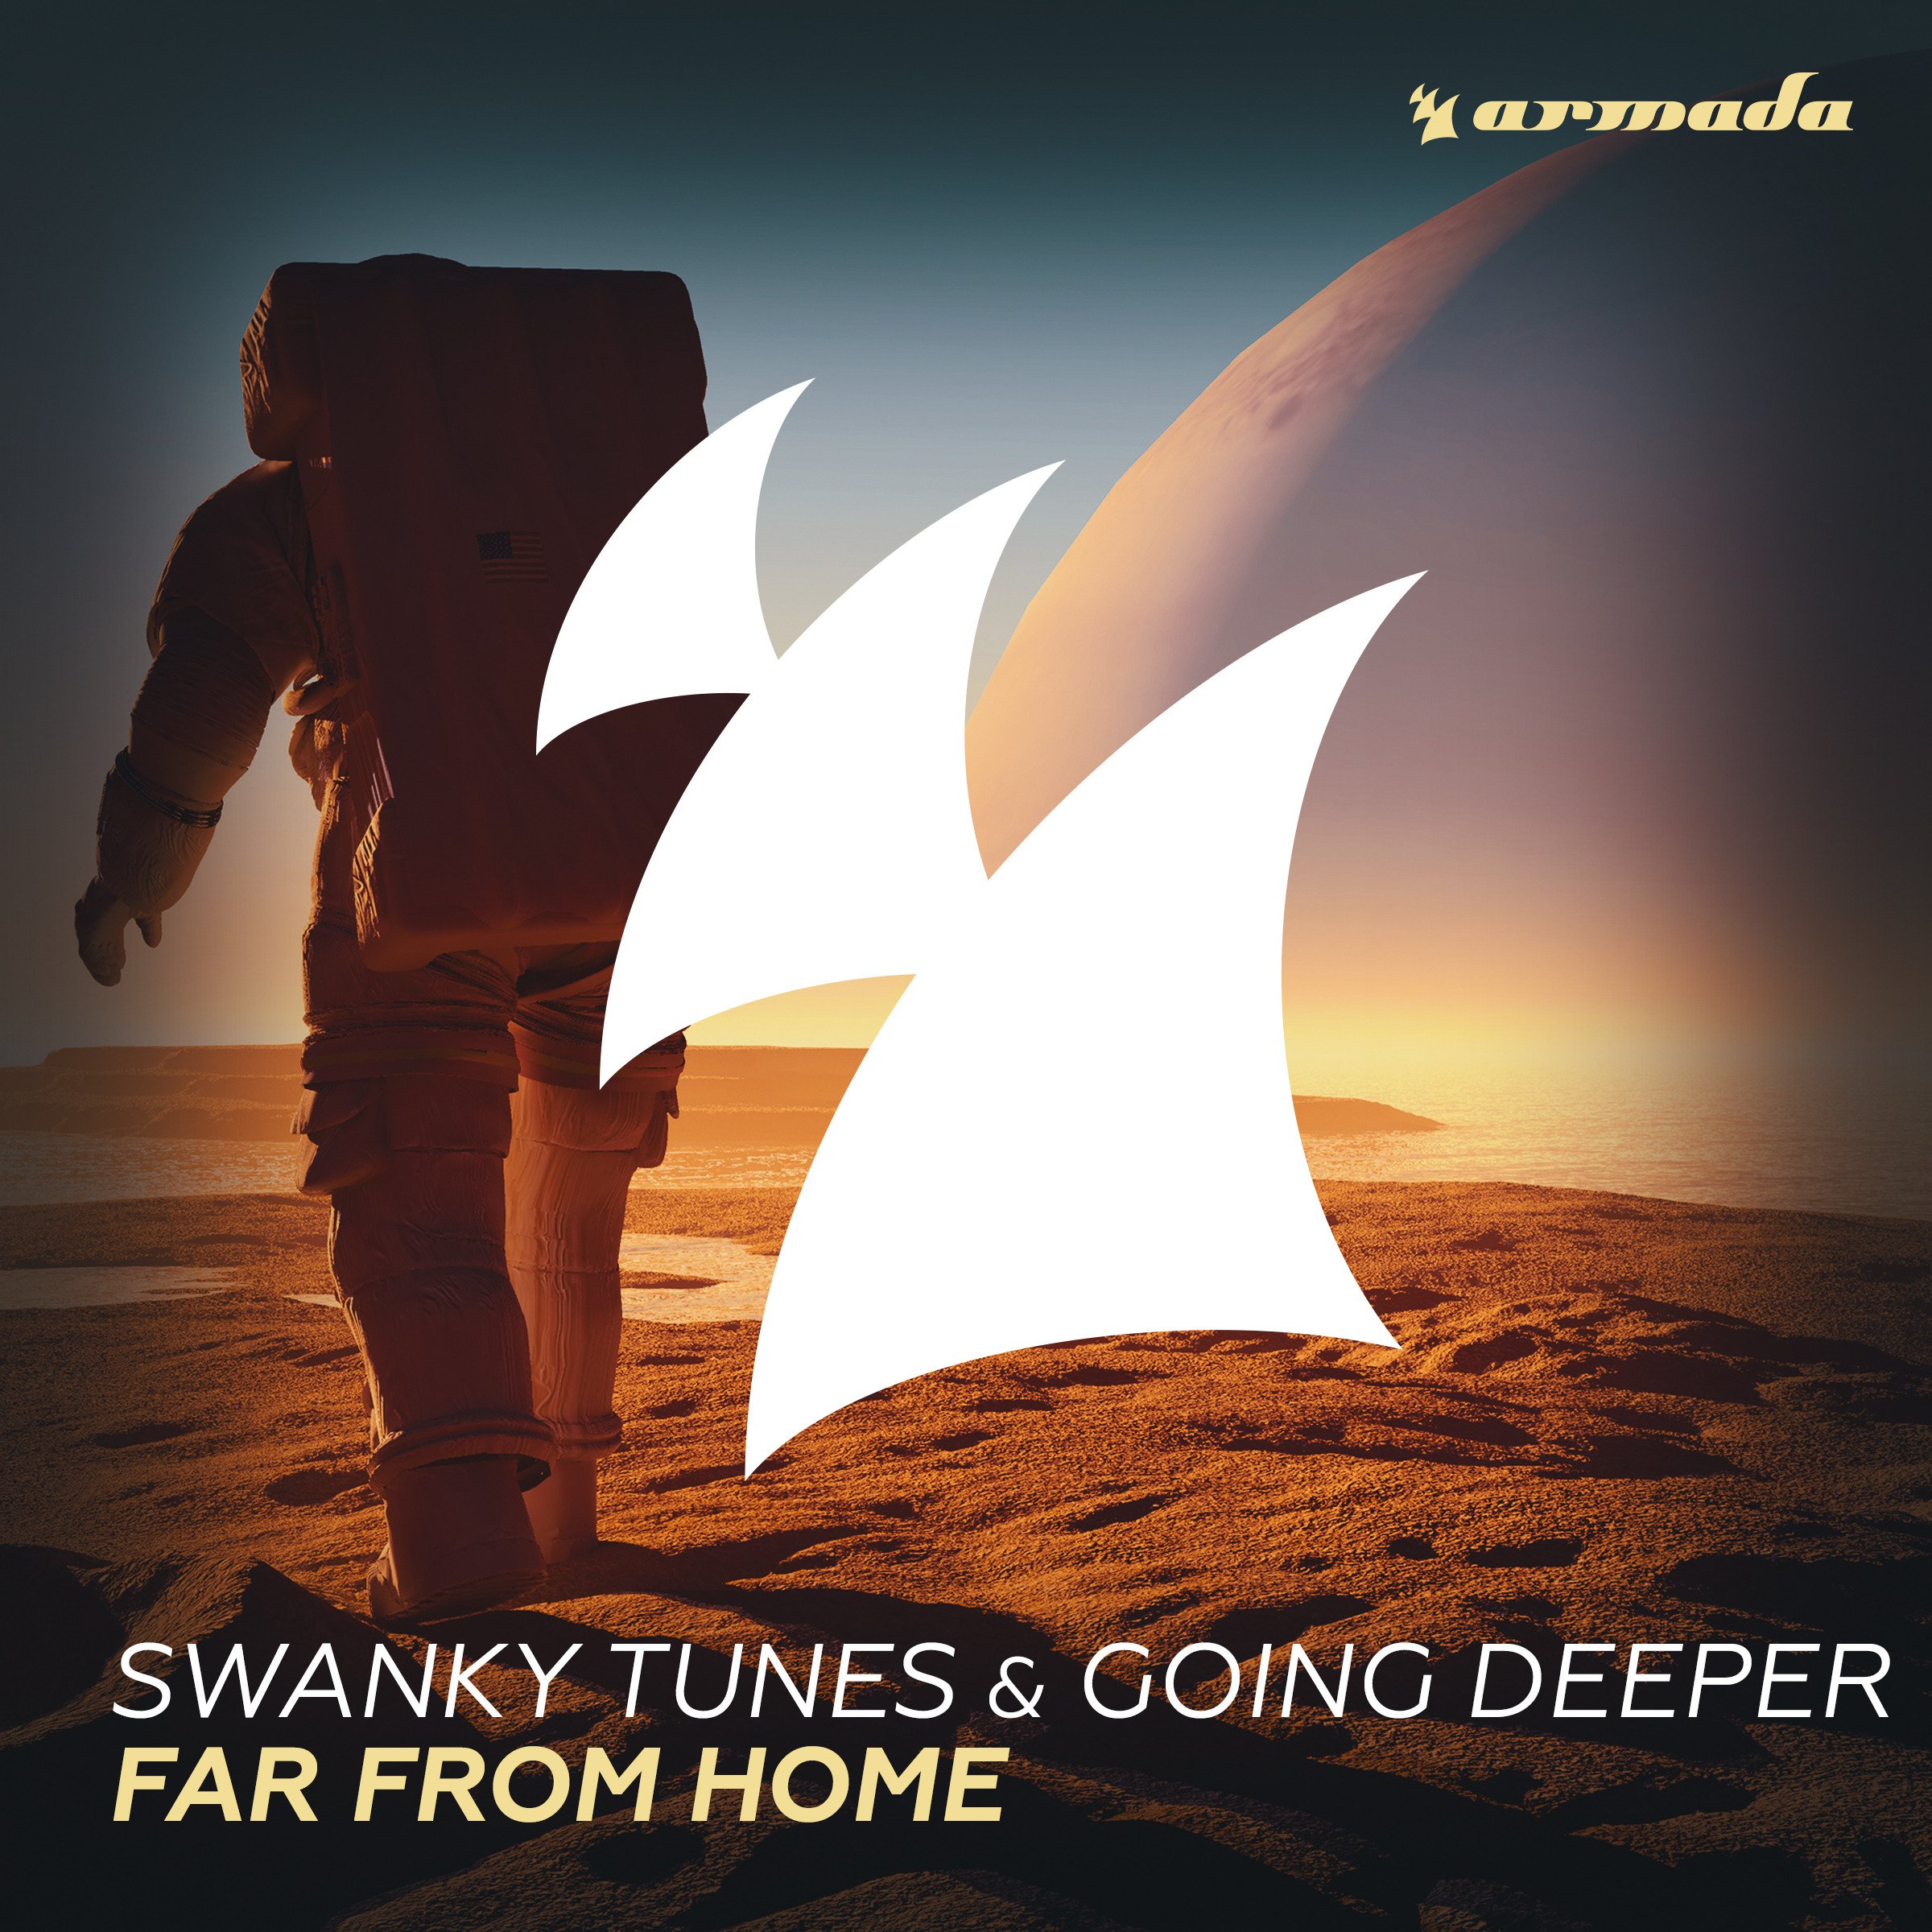 Swanky tunes go deeper. Swanky Tunes & going Deeper. Swanky Tunes & going Deeper - till the end. Swanky Tunes &coing. Swanky Tunes & goimg Deeper far from Home (Radio Edit).